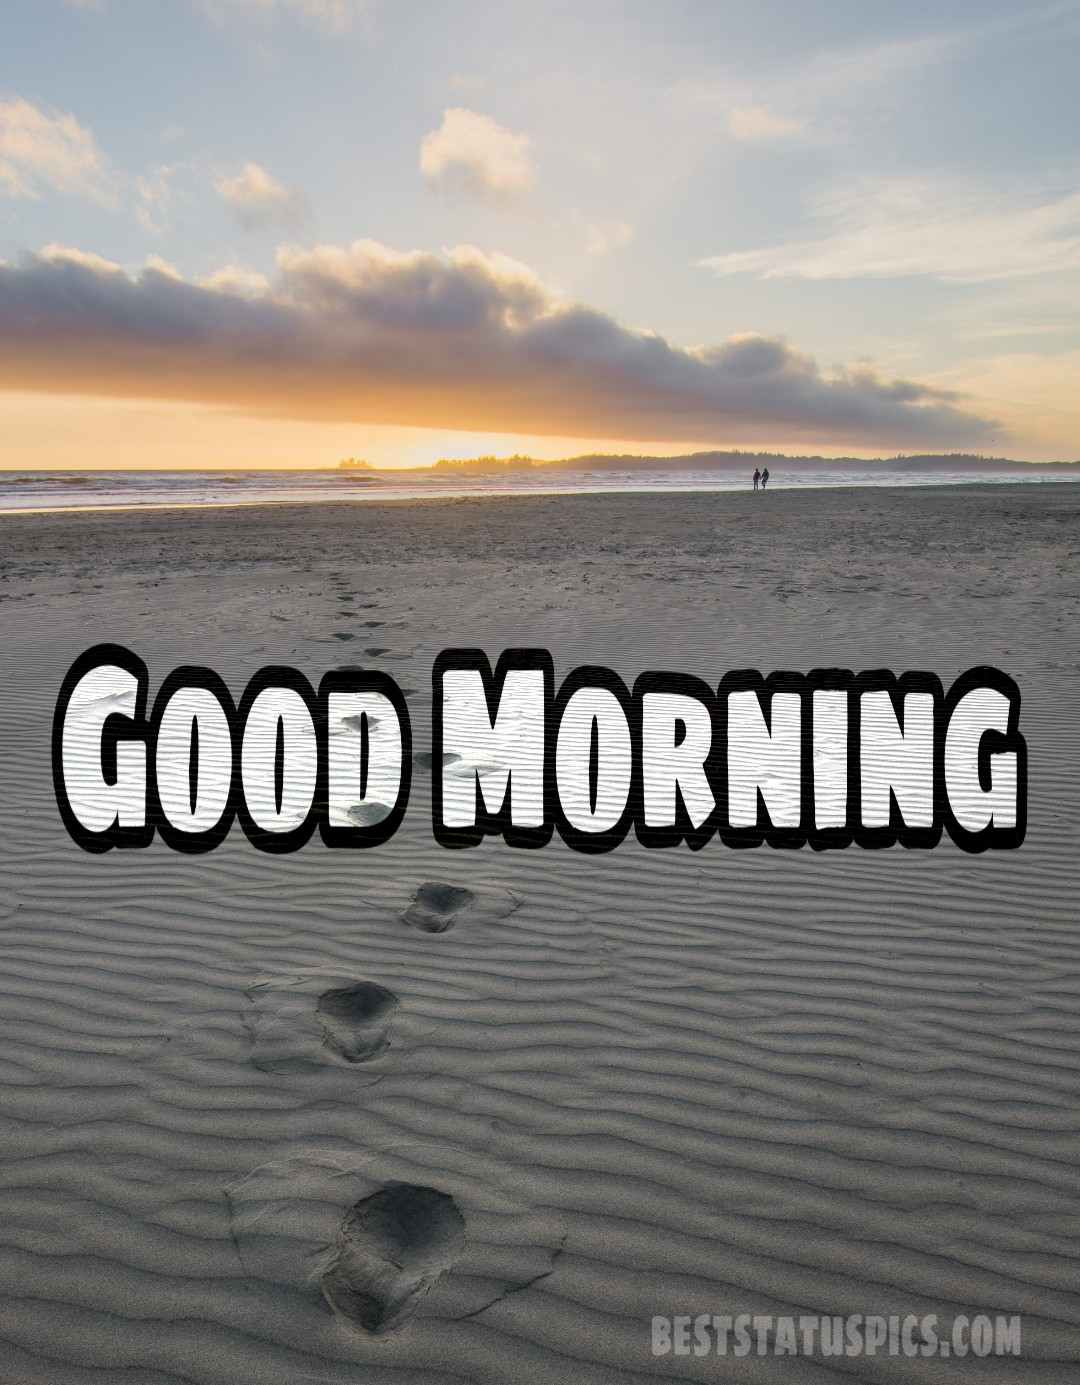 Good morning sea beach image.